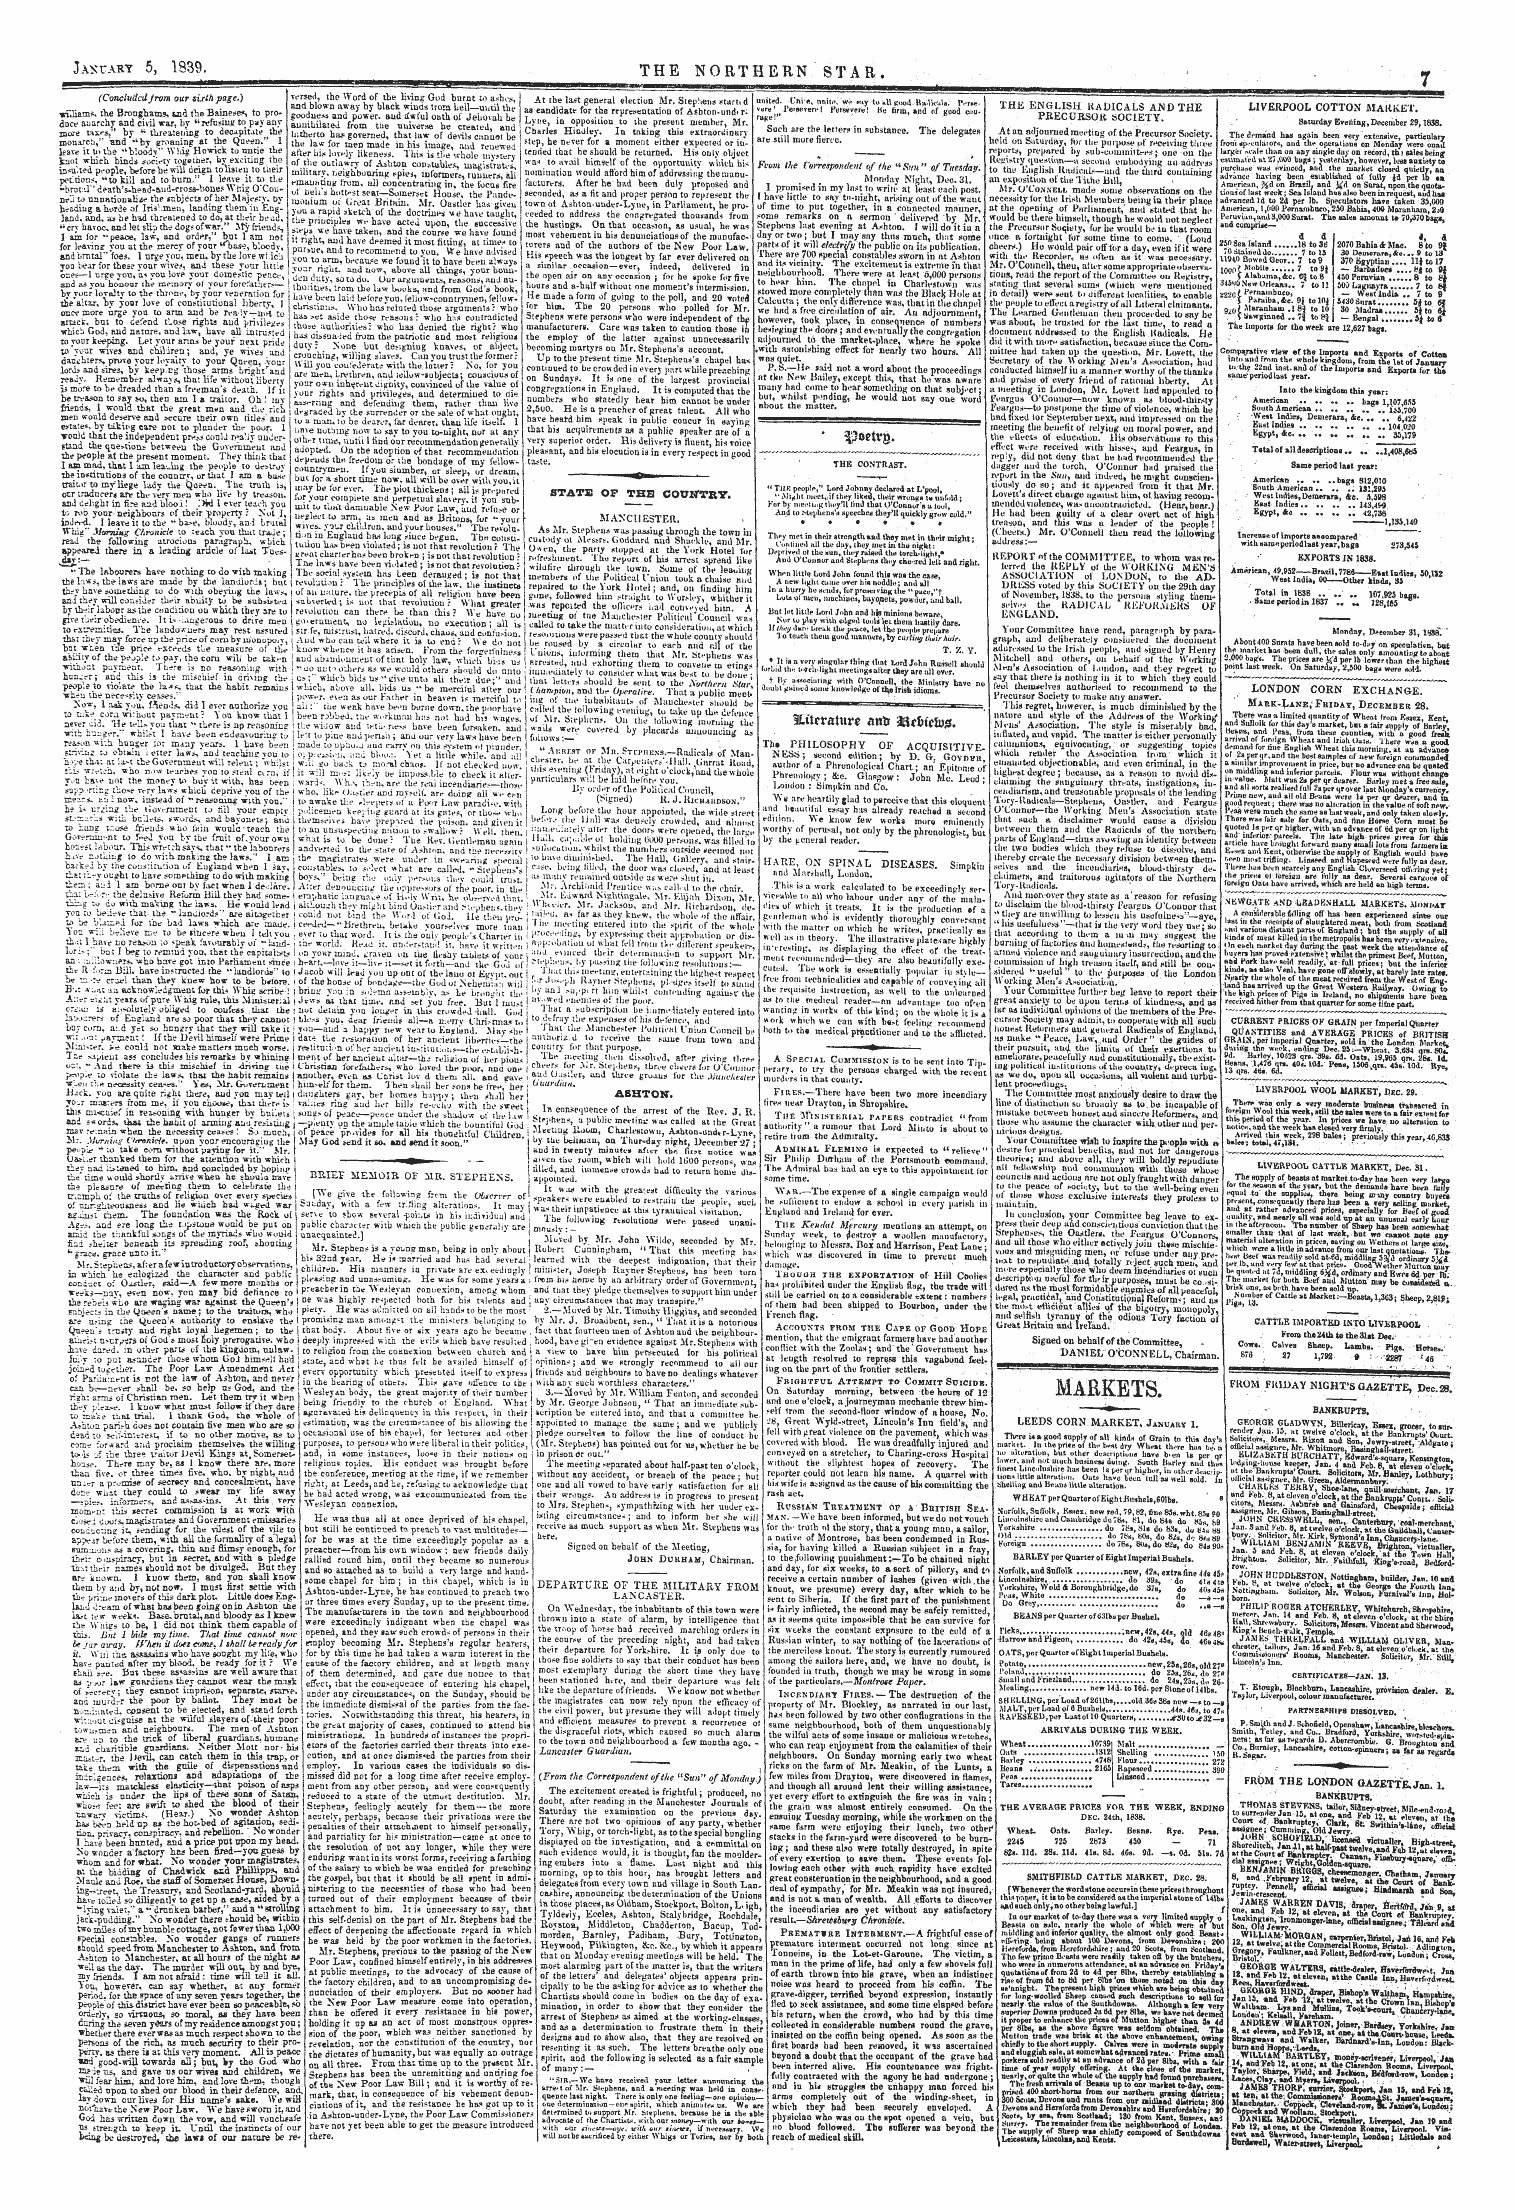 Northern Star (1837-1852): jS F Y, 1st edition - * ^Octtg.